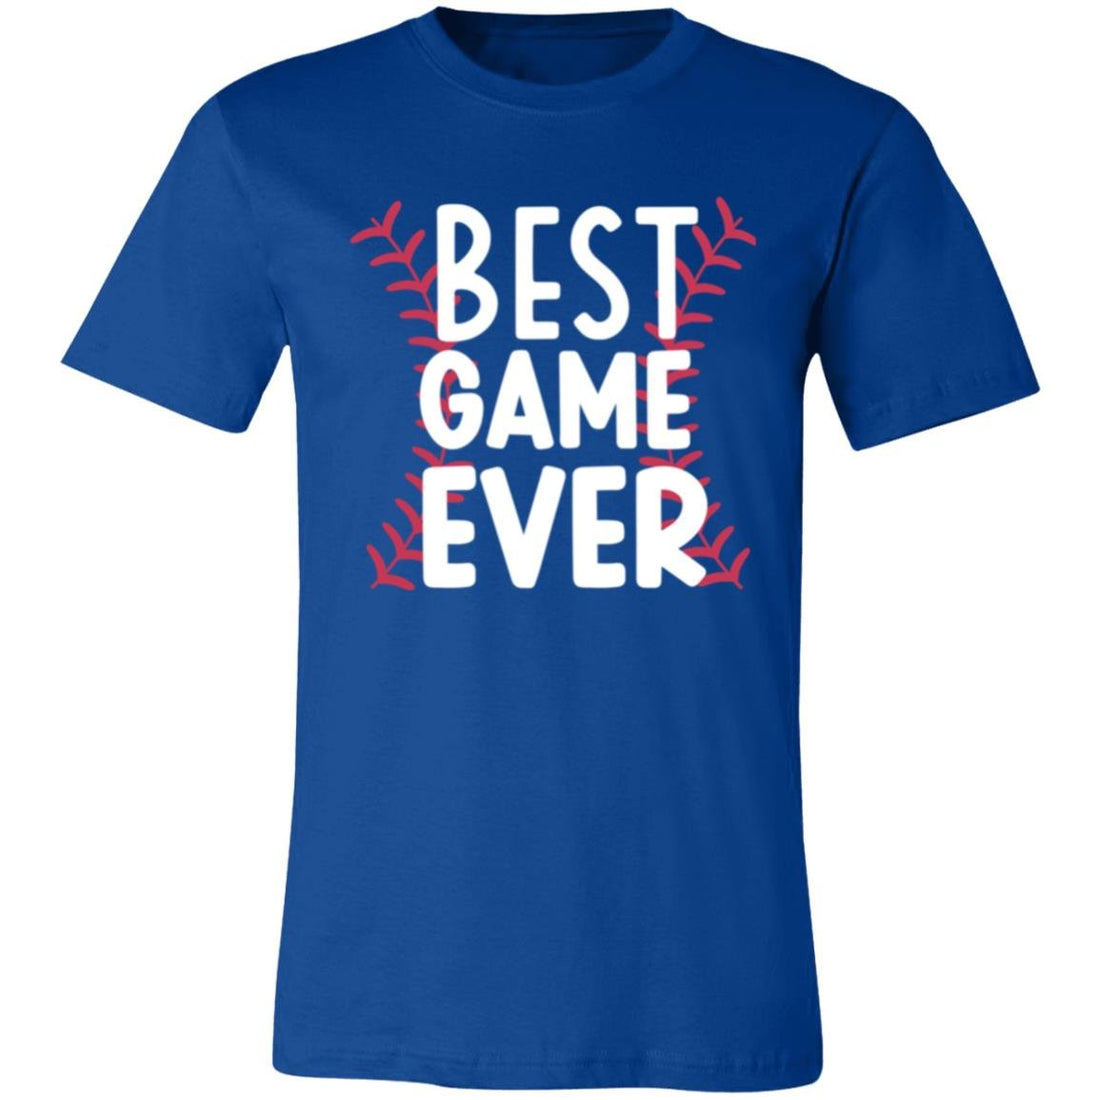 Best Game Ever Short-Sleeve T-Shirt - T-Shirts - Positively Sassy - Best Game Ever Short-Sleeve T-Shirt